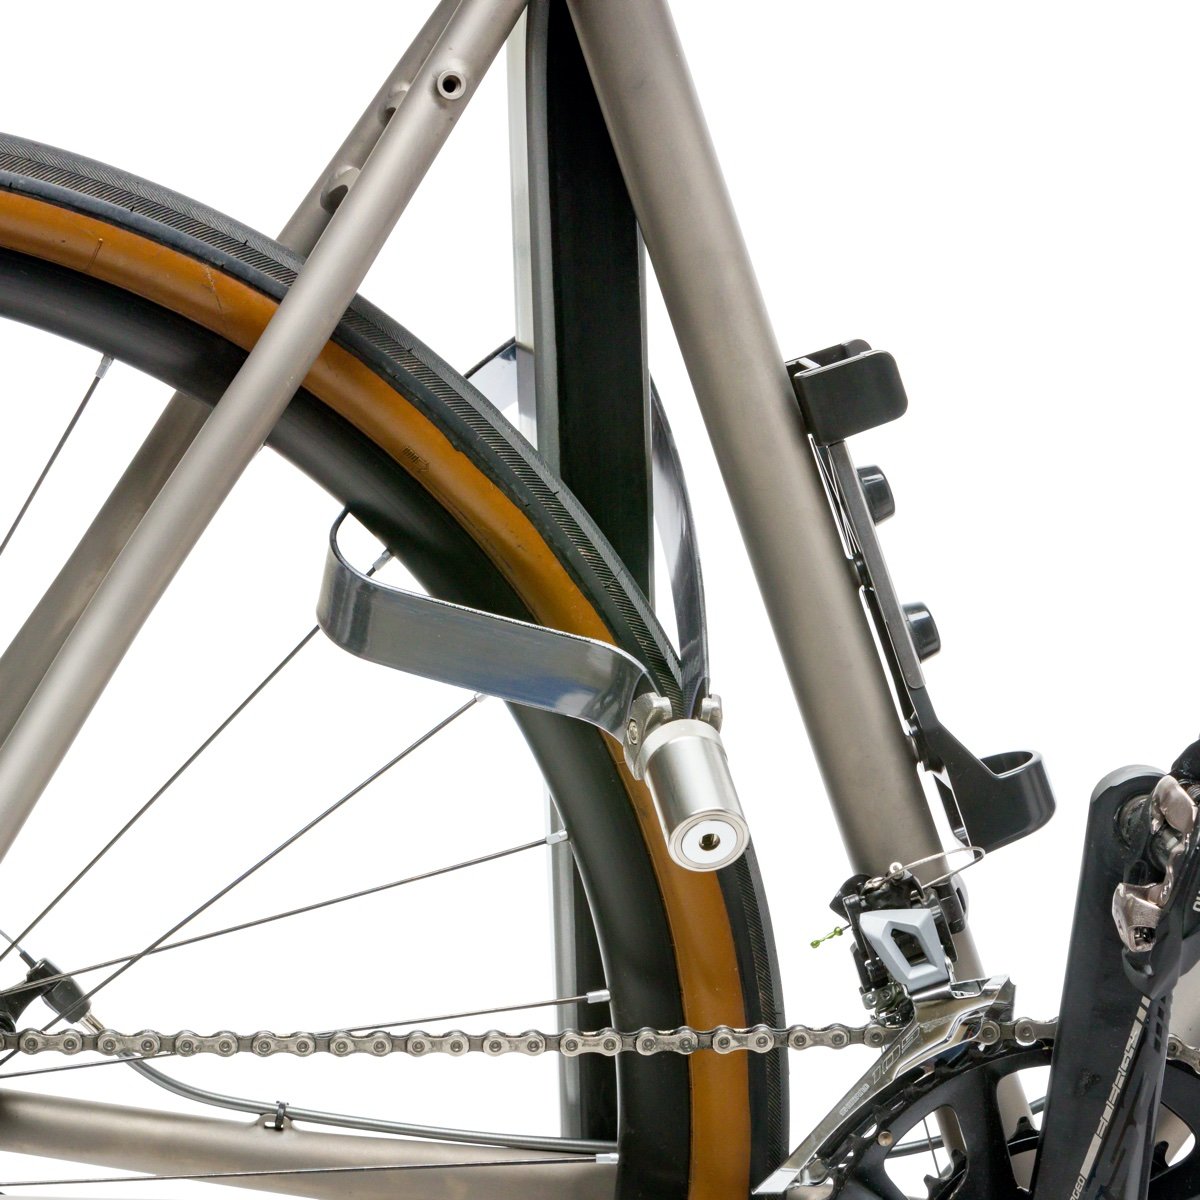 Close up view of TiGr BLUE Mini lock fixed to bike wheel on white background.